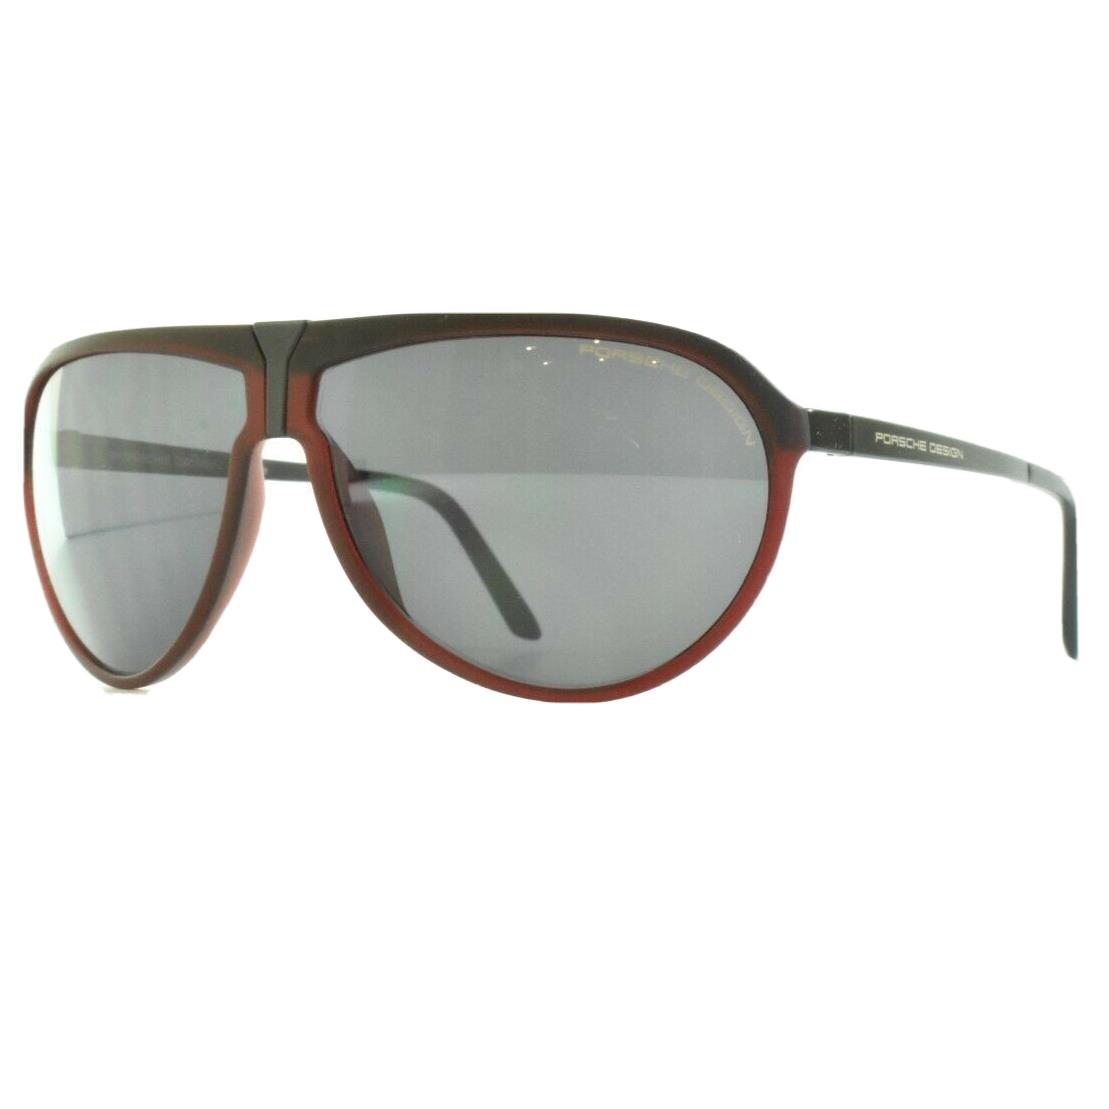 Porsche 8619 B Full Rim Mens Black and Transparent Bordeaux Shield Sunglasses